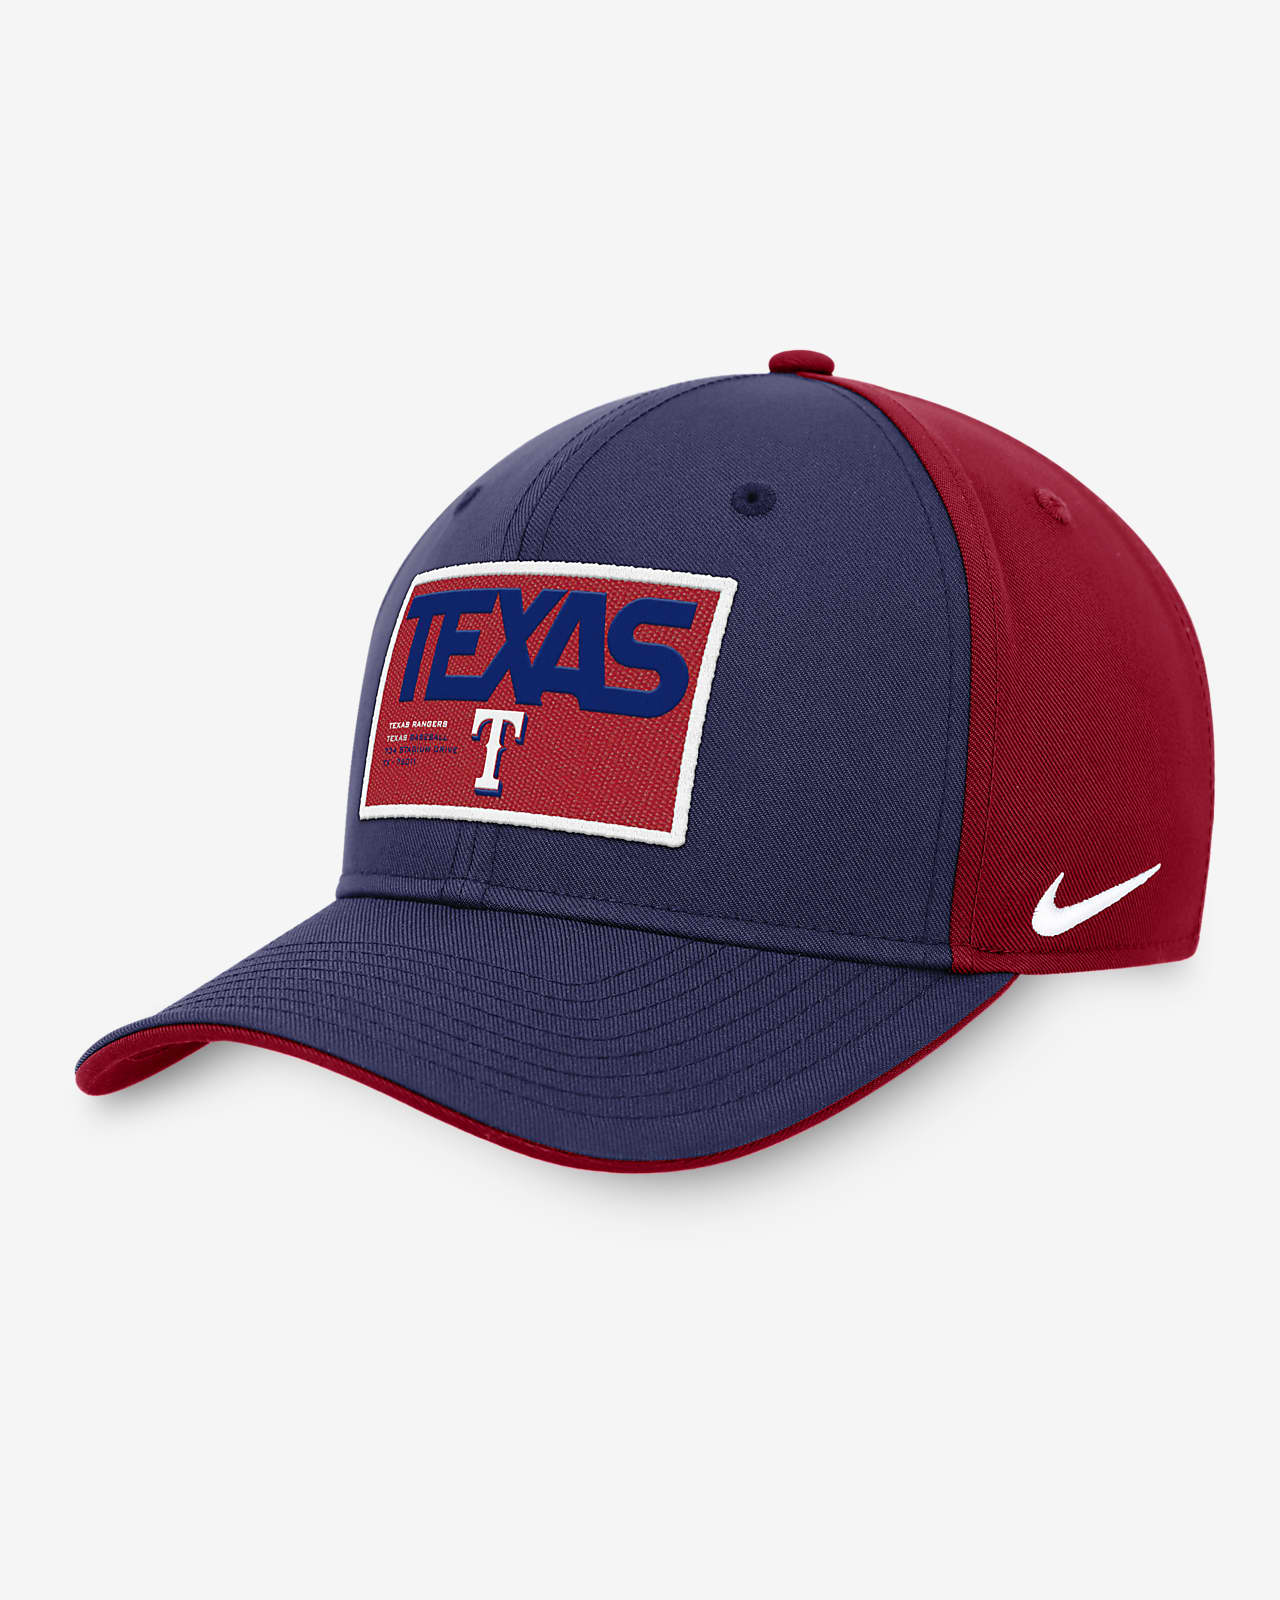 Vintage Texas Rangers Hat Cap Fitted 7 Mens MLB Baseball New Era